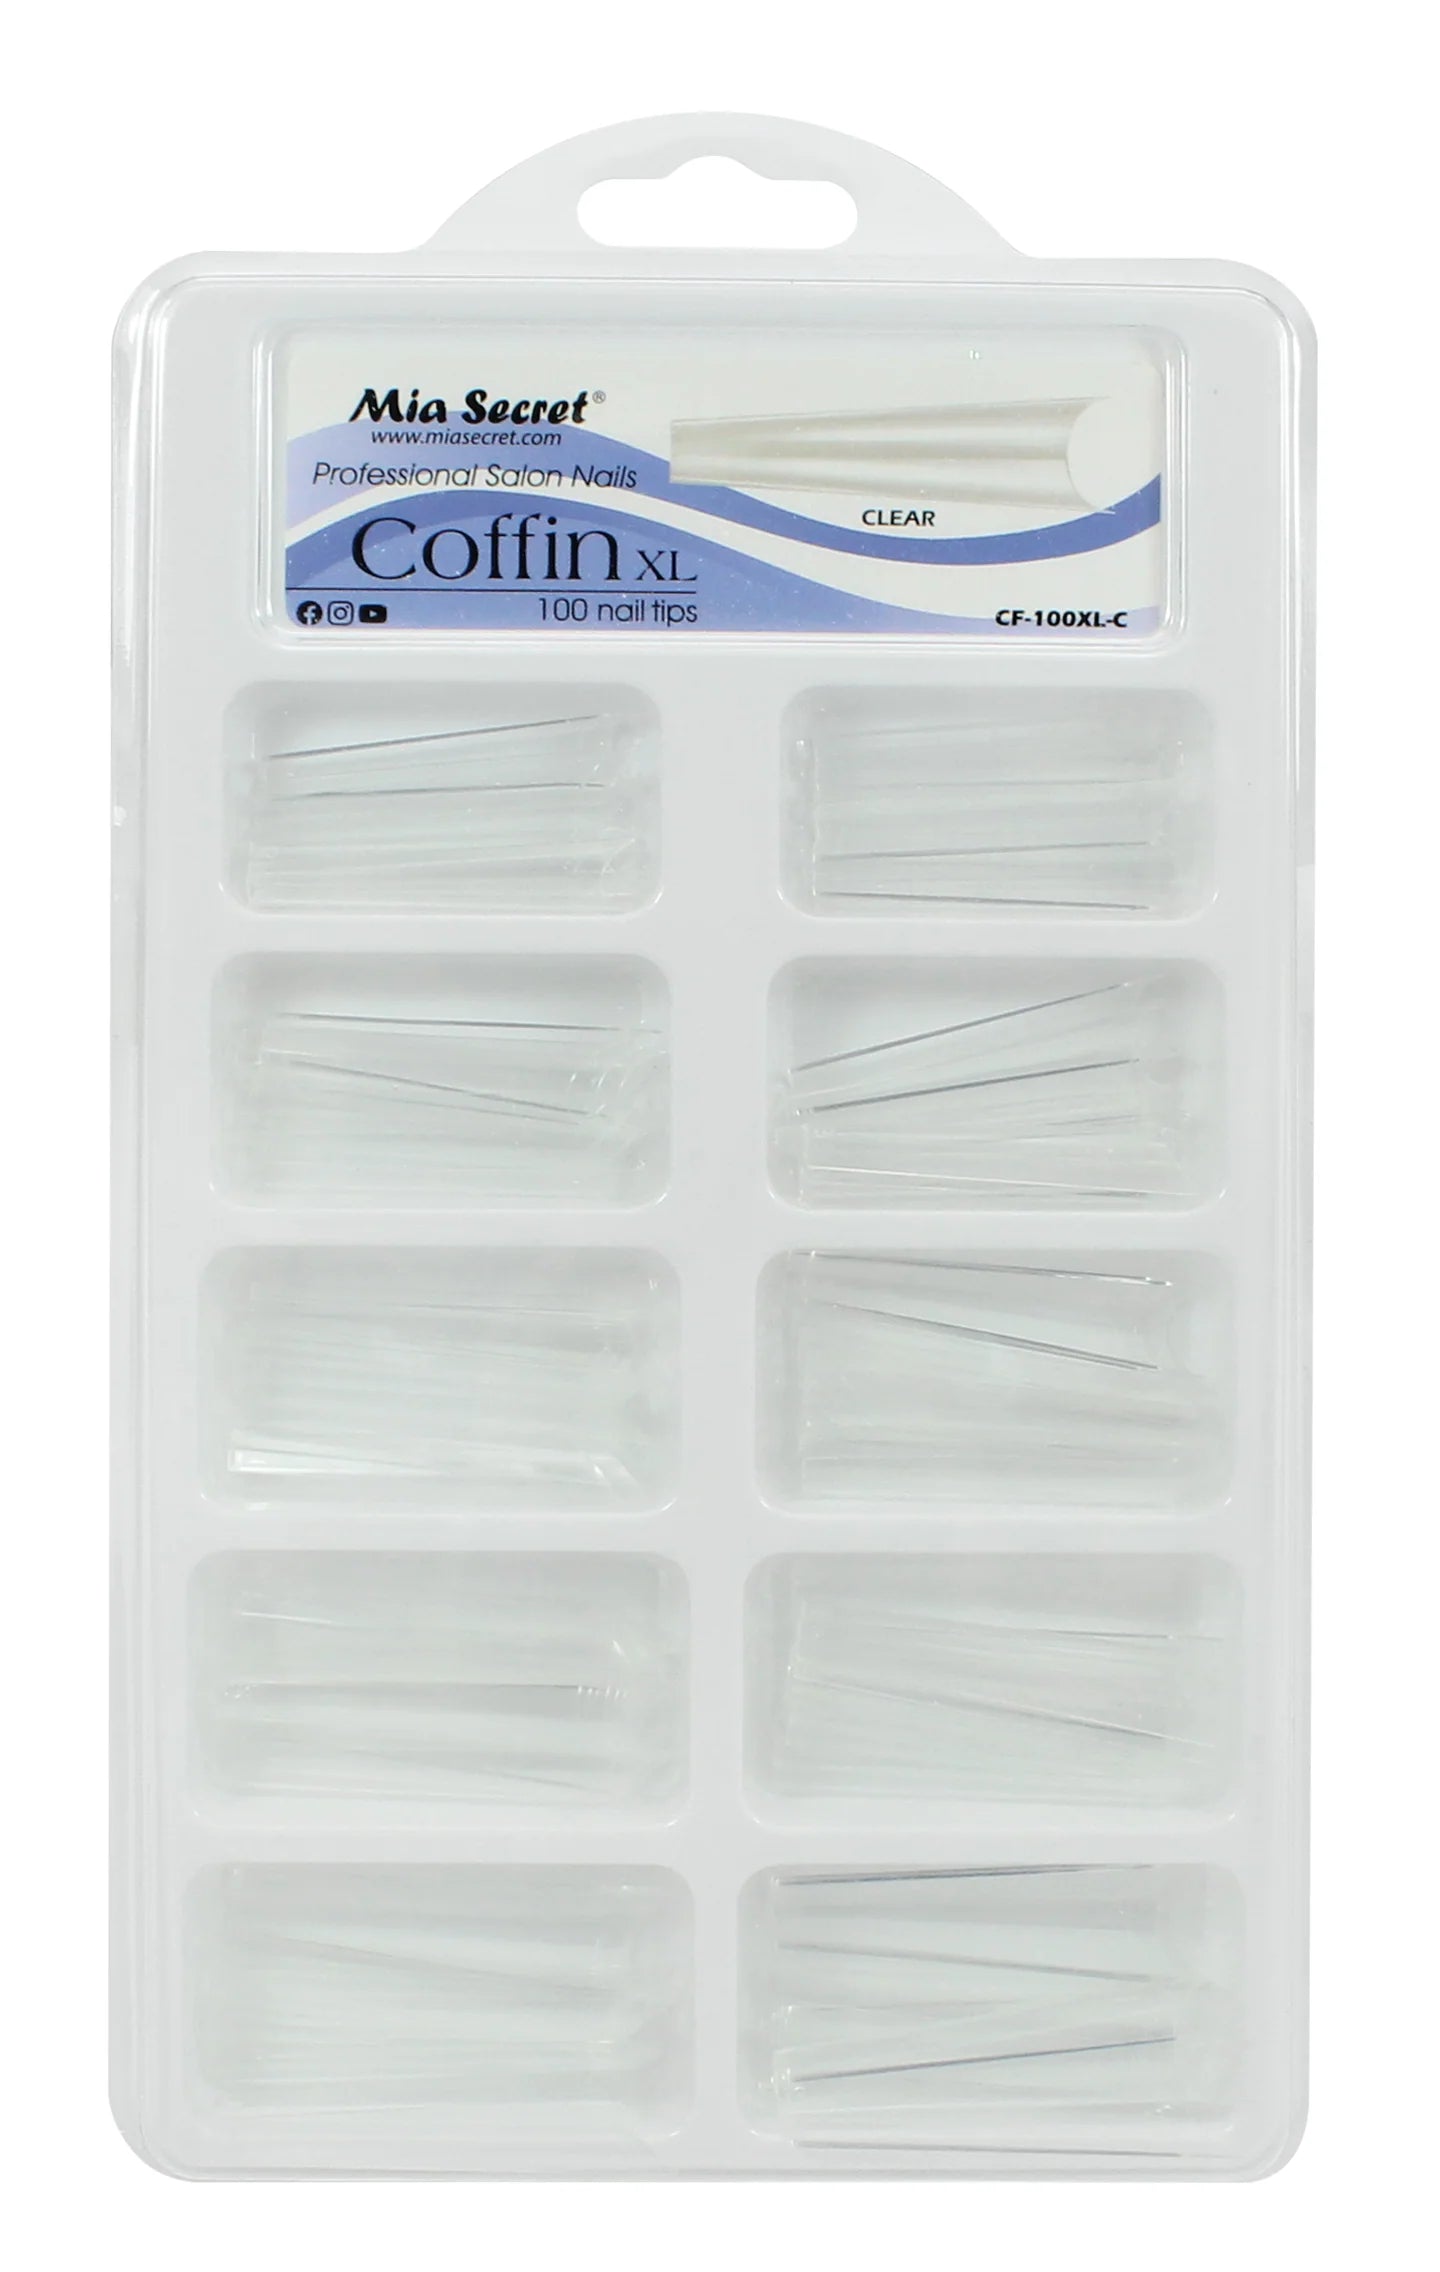 COFFIN XL CLEAR 100 NAIL TIPS IN PVC BLISTER SKU: CF-100XL-C